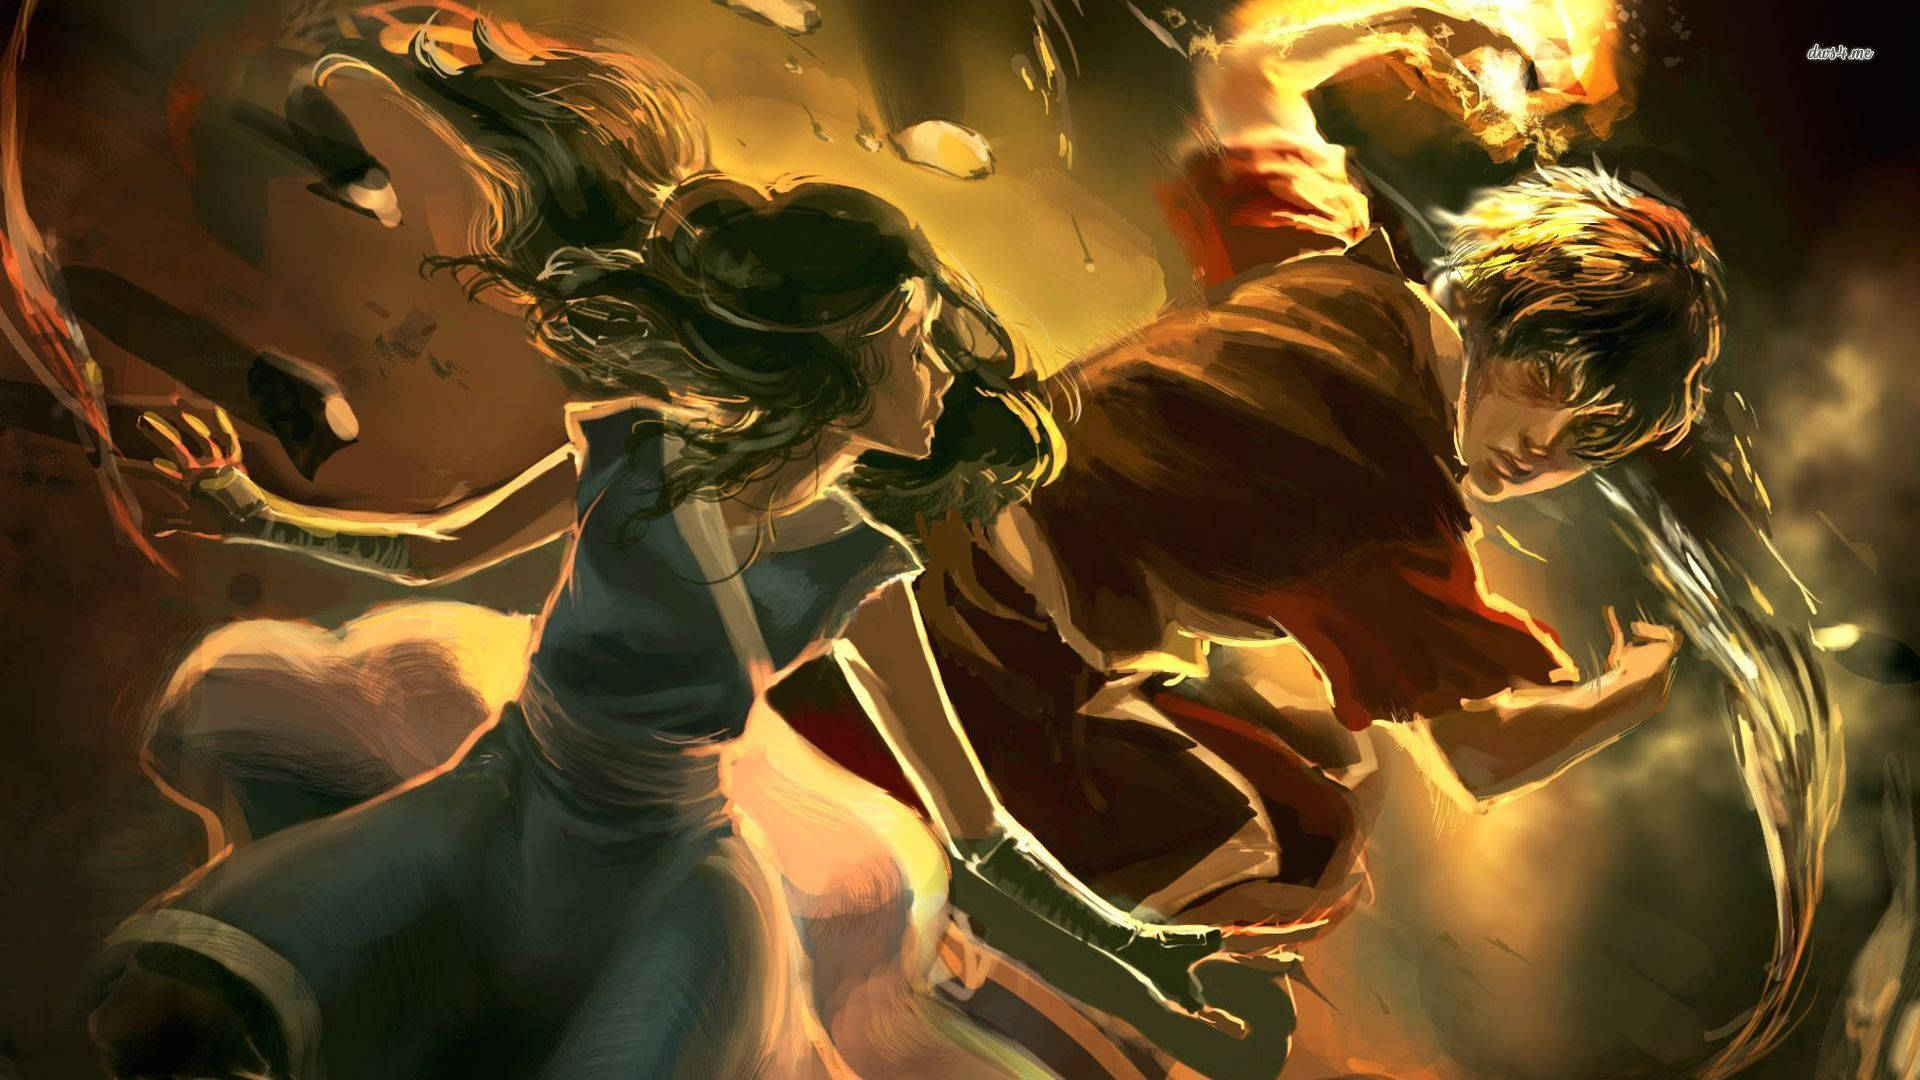 Firebender Zuko and Waterbender Katara face off in an epic battle of Avatar The Last Airbender Wallpaper